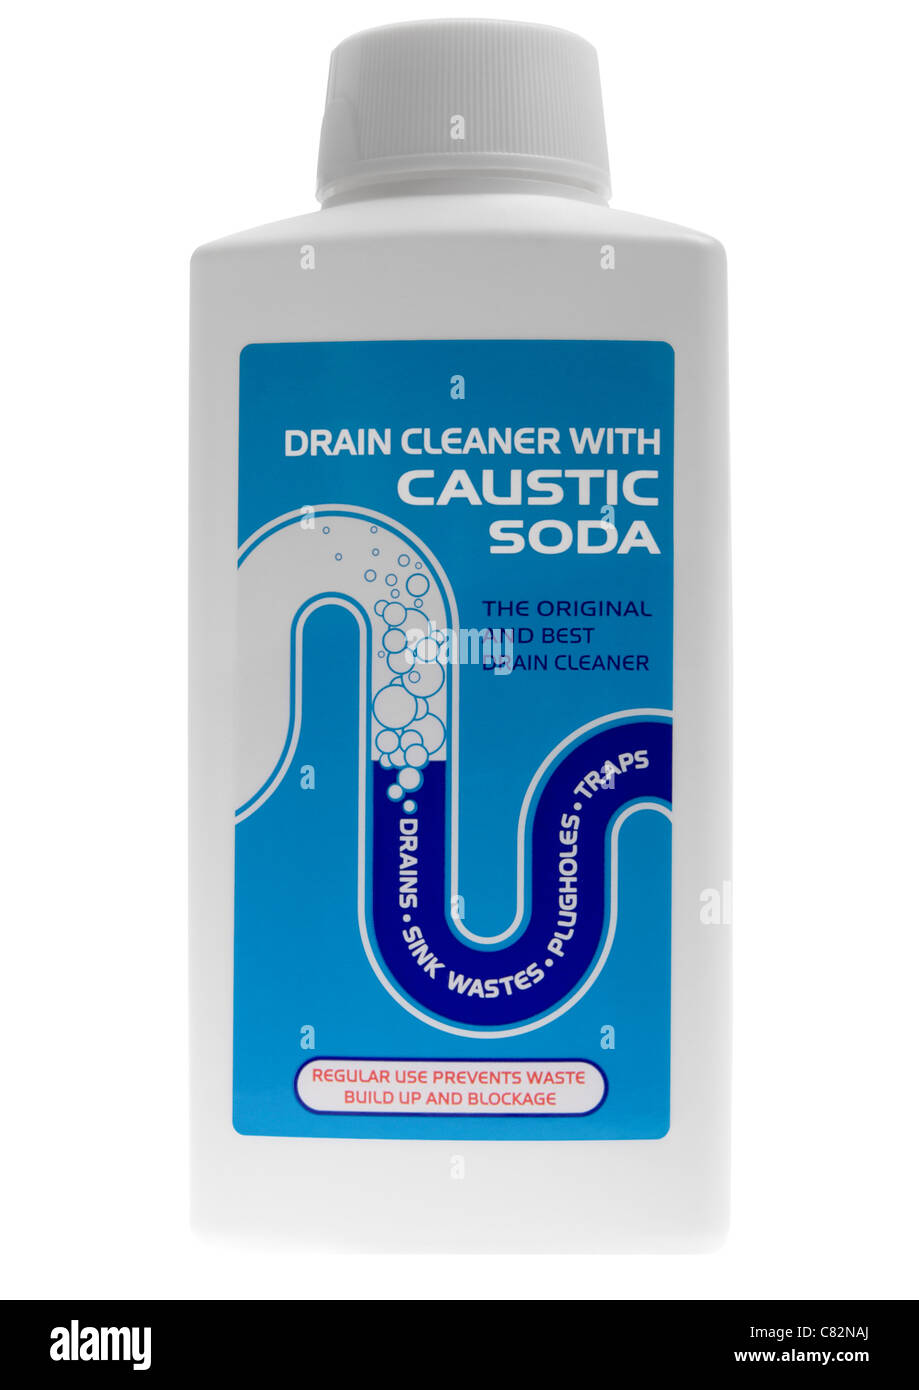 https://c8.alamy.com/comp/C82NAJ/bottle-of-caustic-soda-drain-cleaner-on-white-background-C82NAJ.jpg